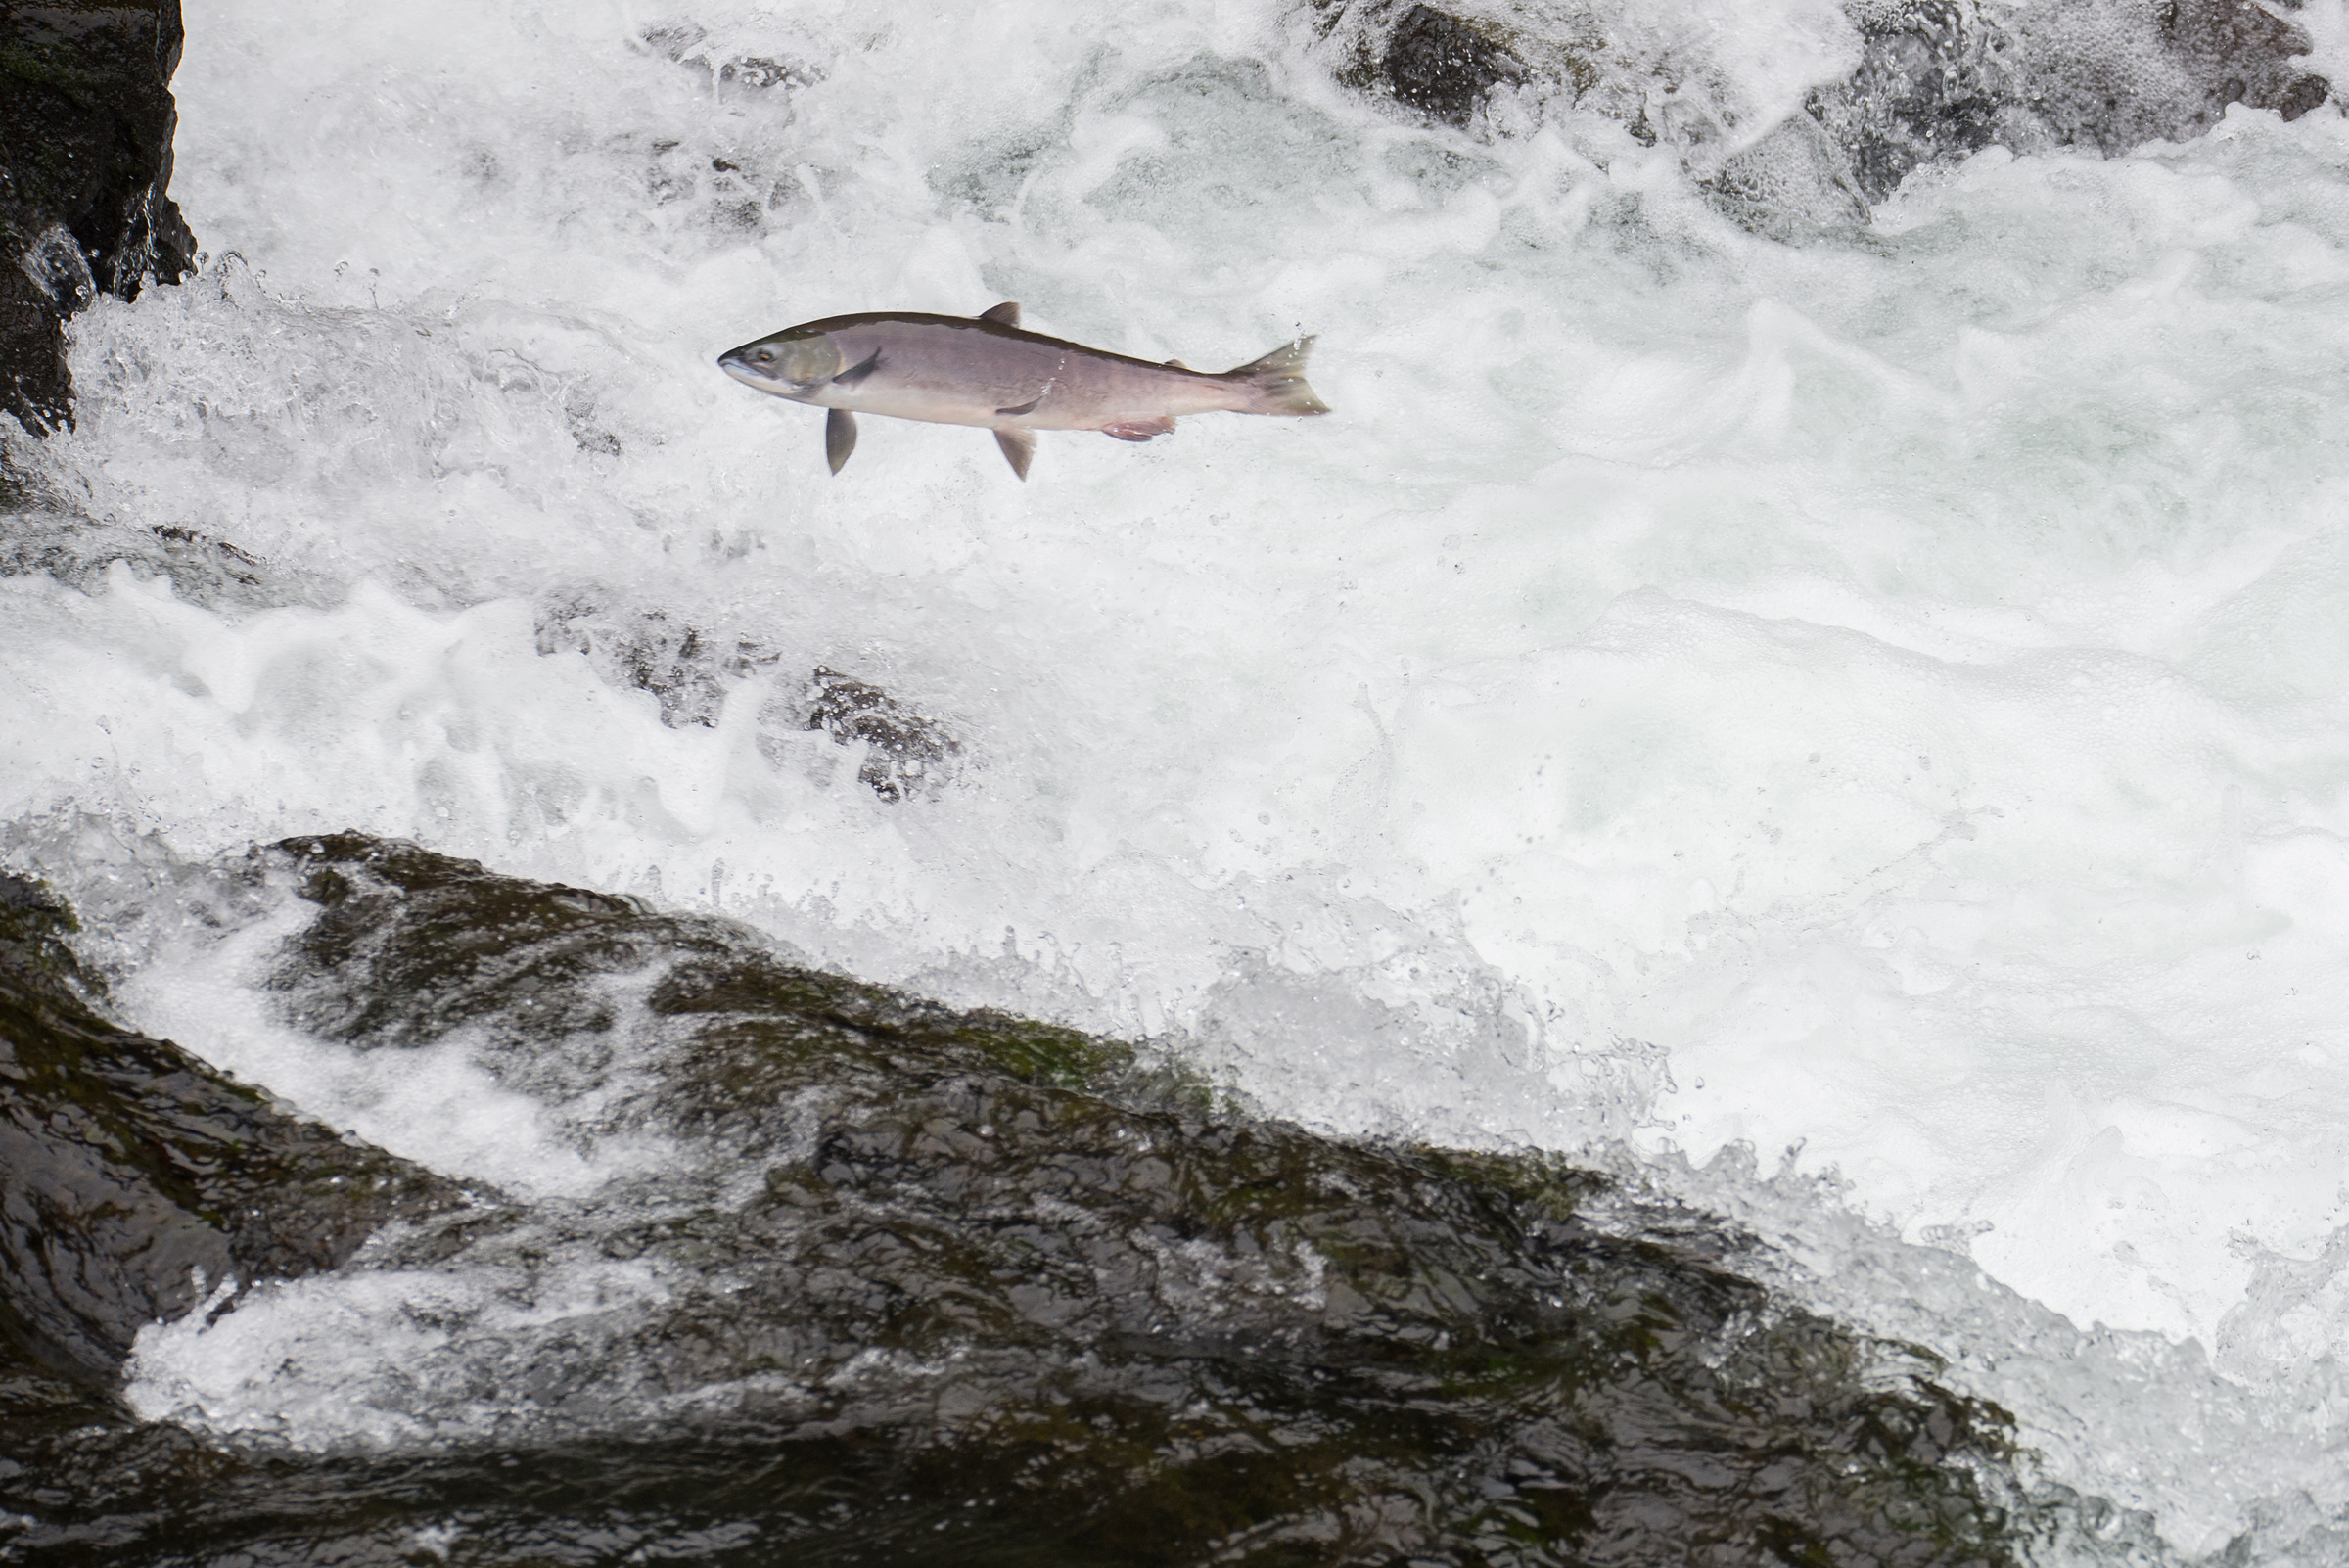 Pacific Salmon in Alaska, United States